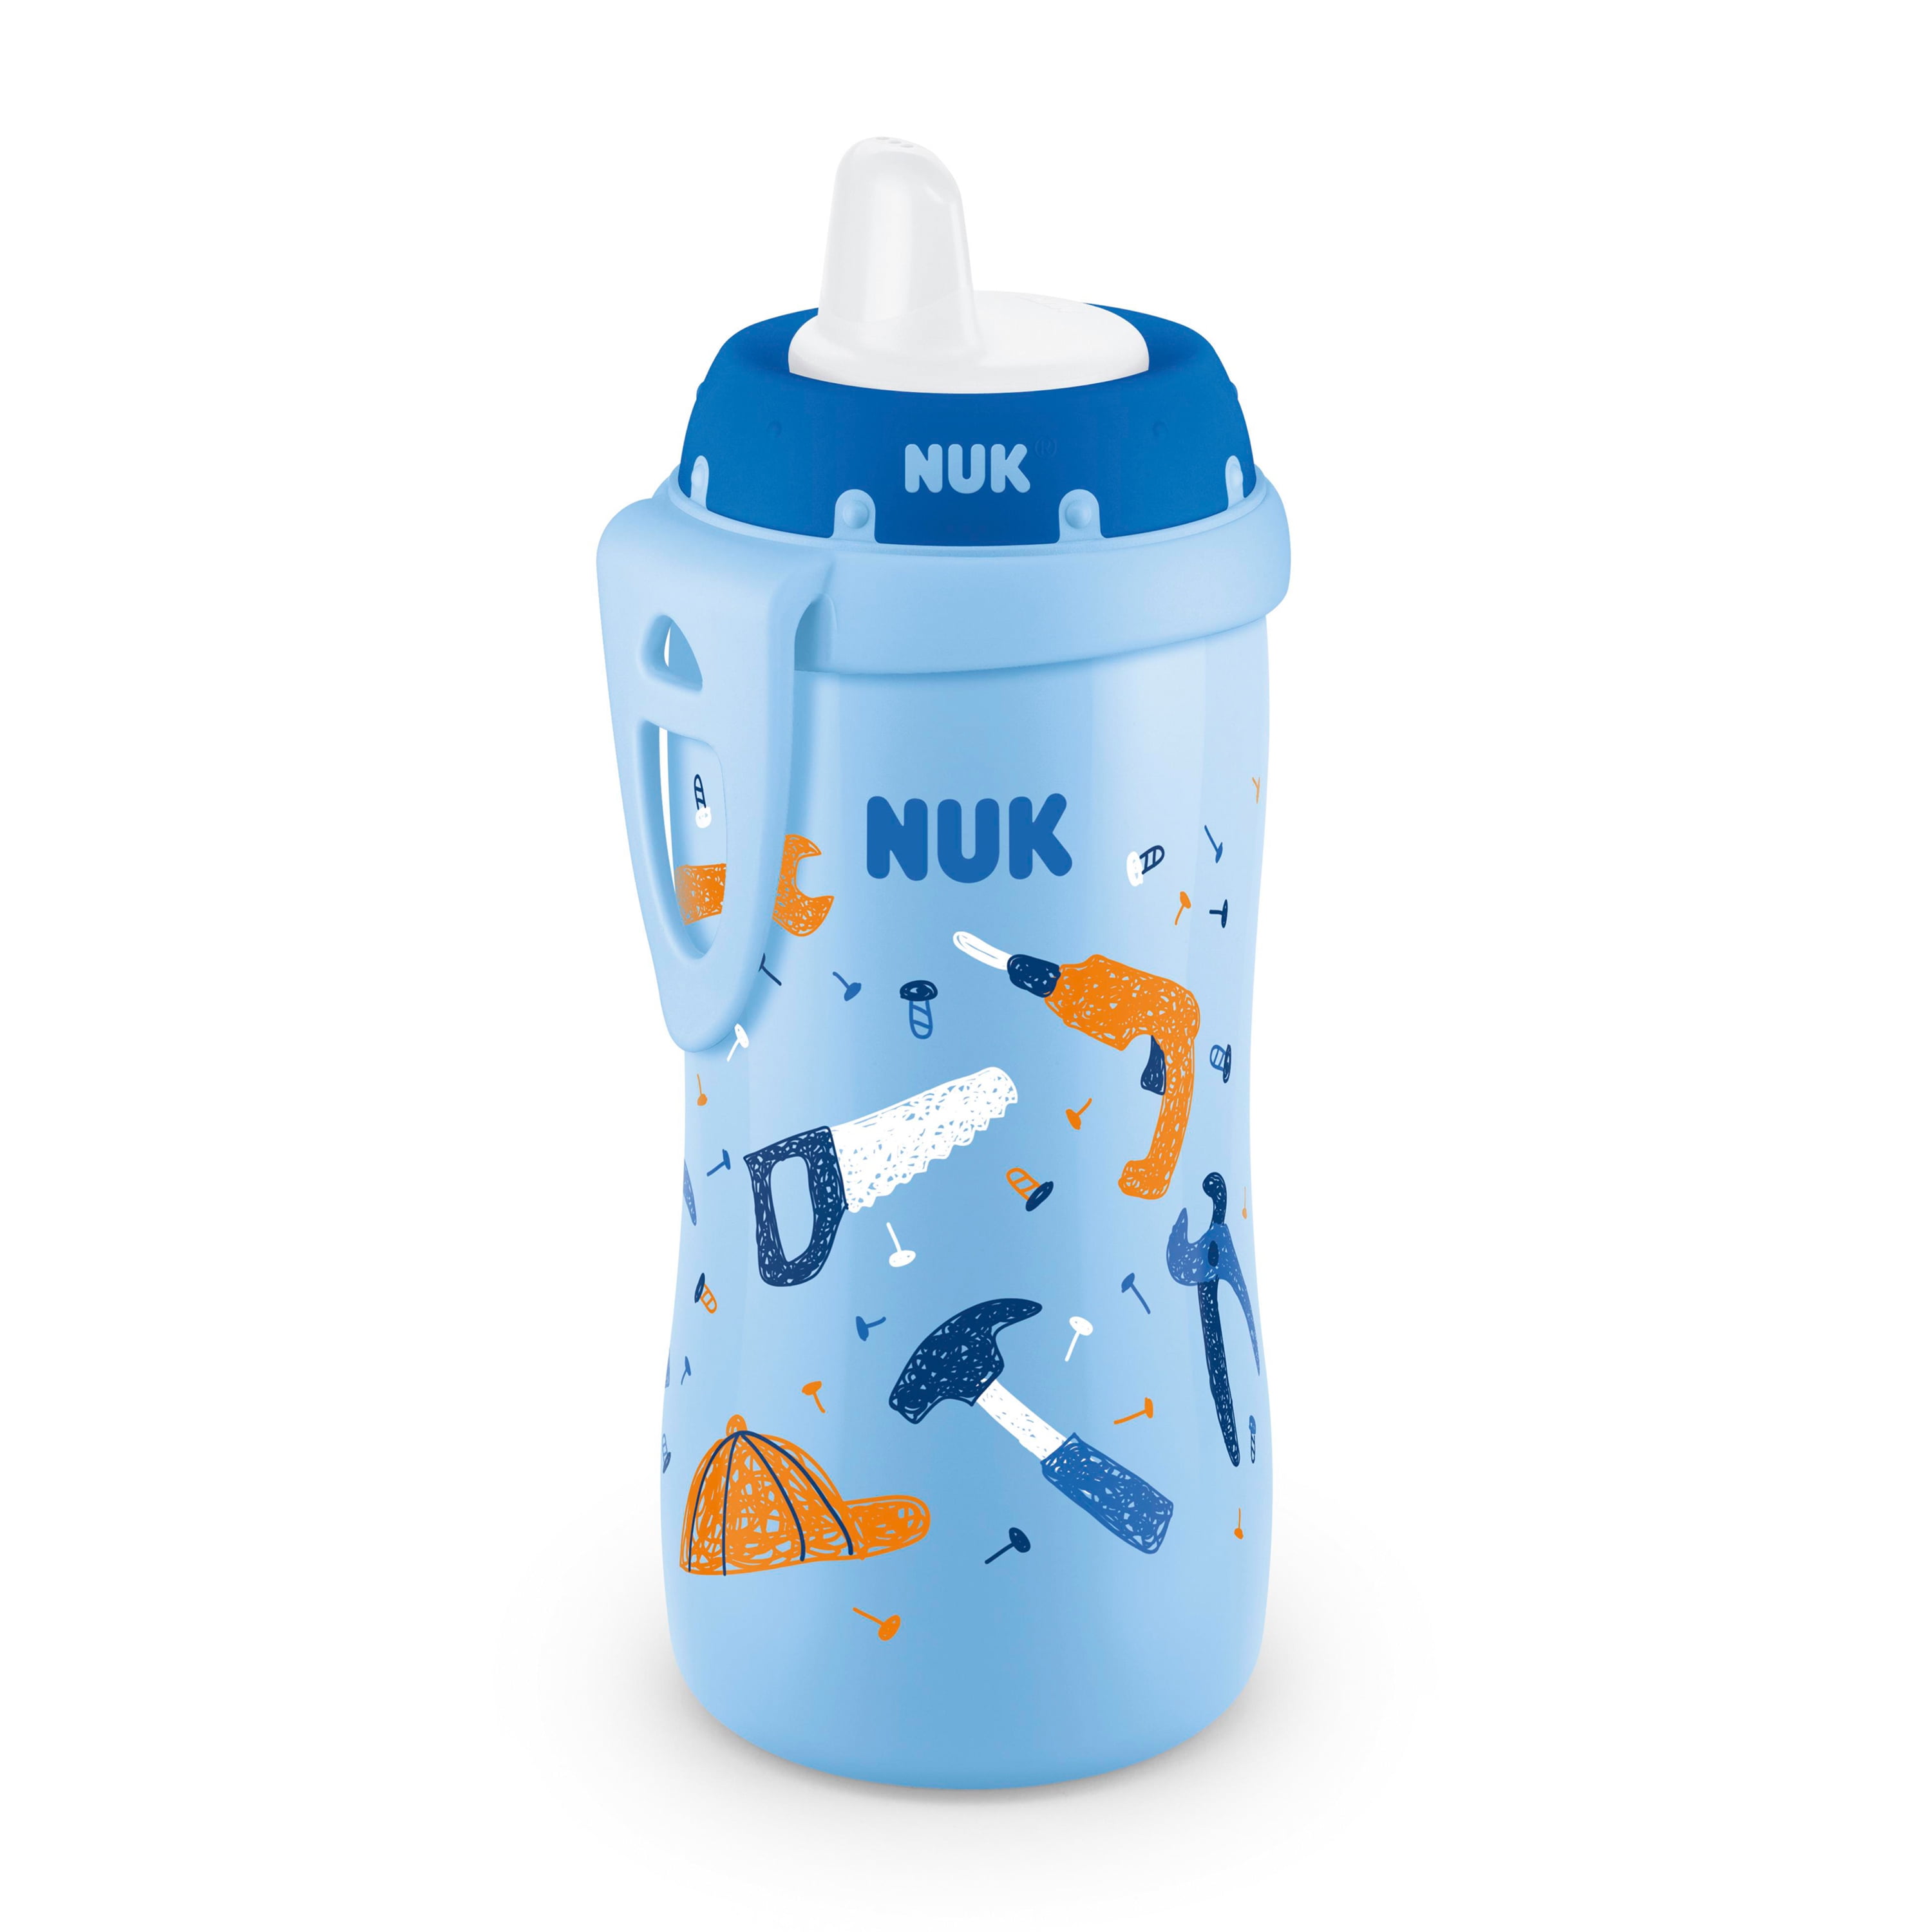 NUK Advanced Cup-like Rim Sippy Cup, 10 oz., Blue Camo –